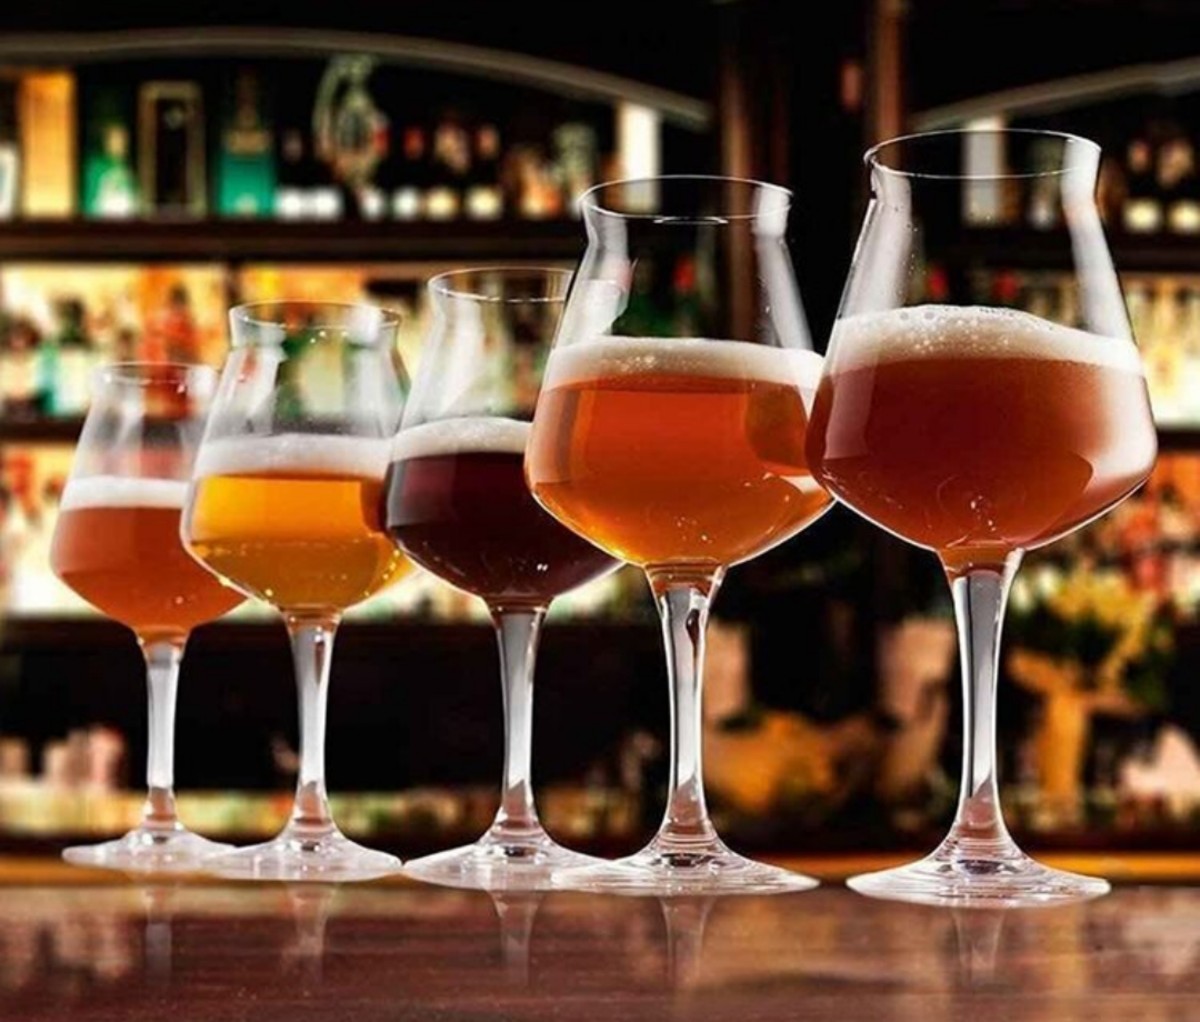 Rastal Teku Set of 6 glasses lined up on a bar filled with beer